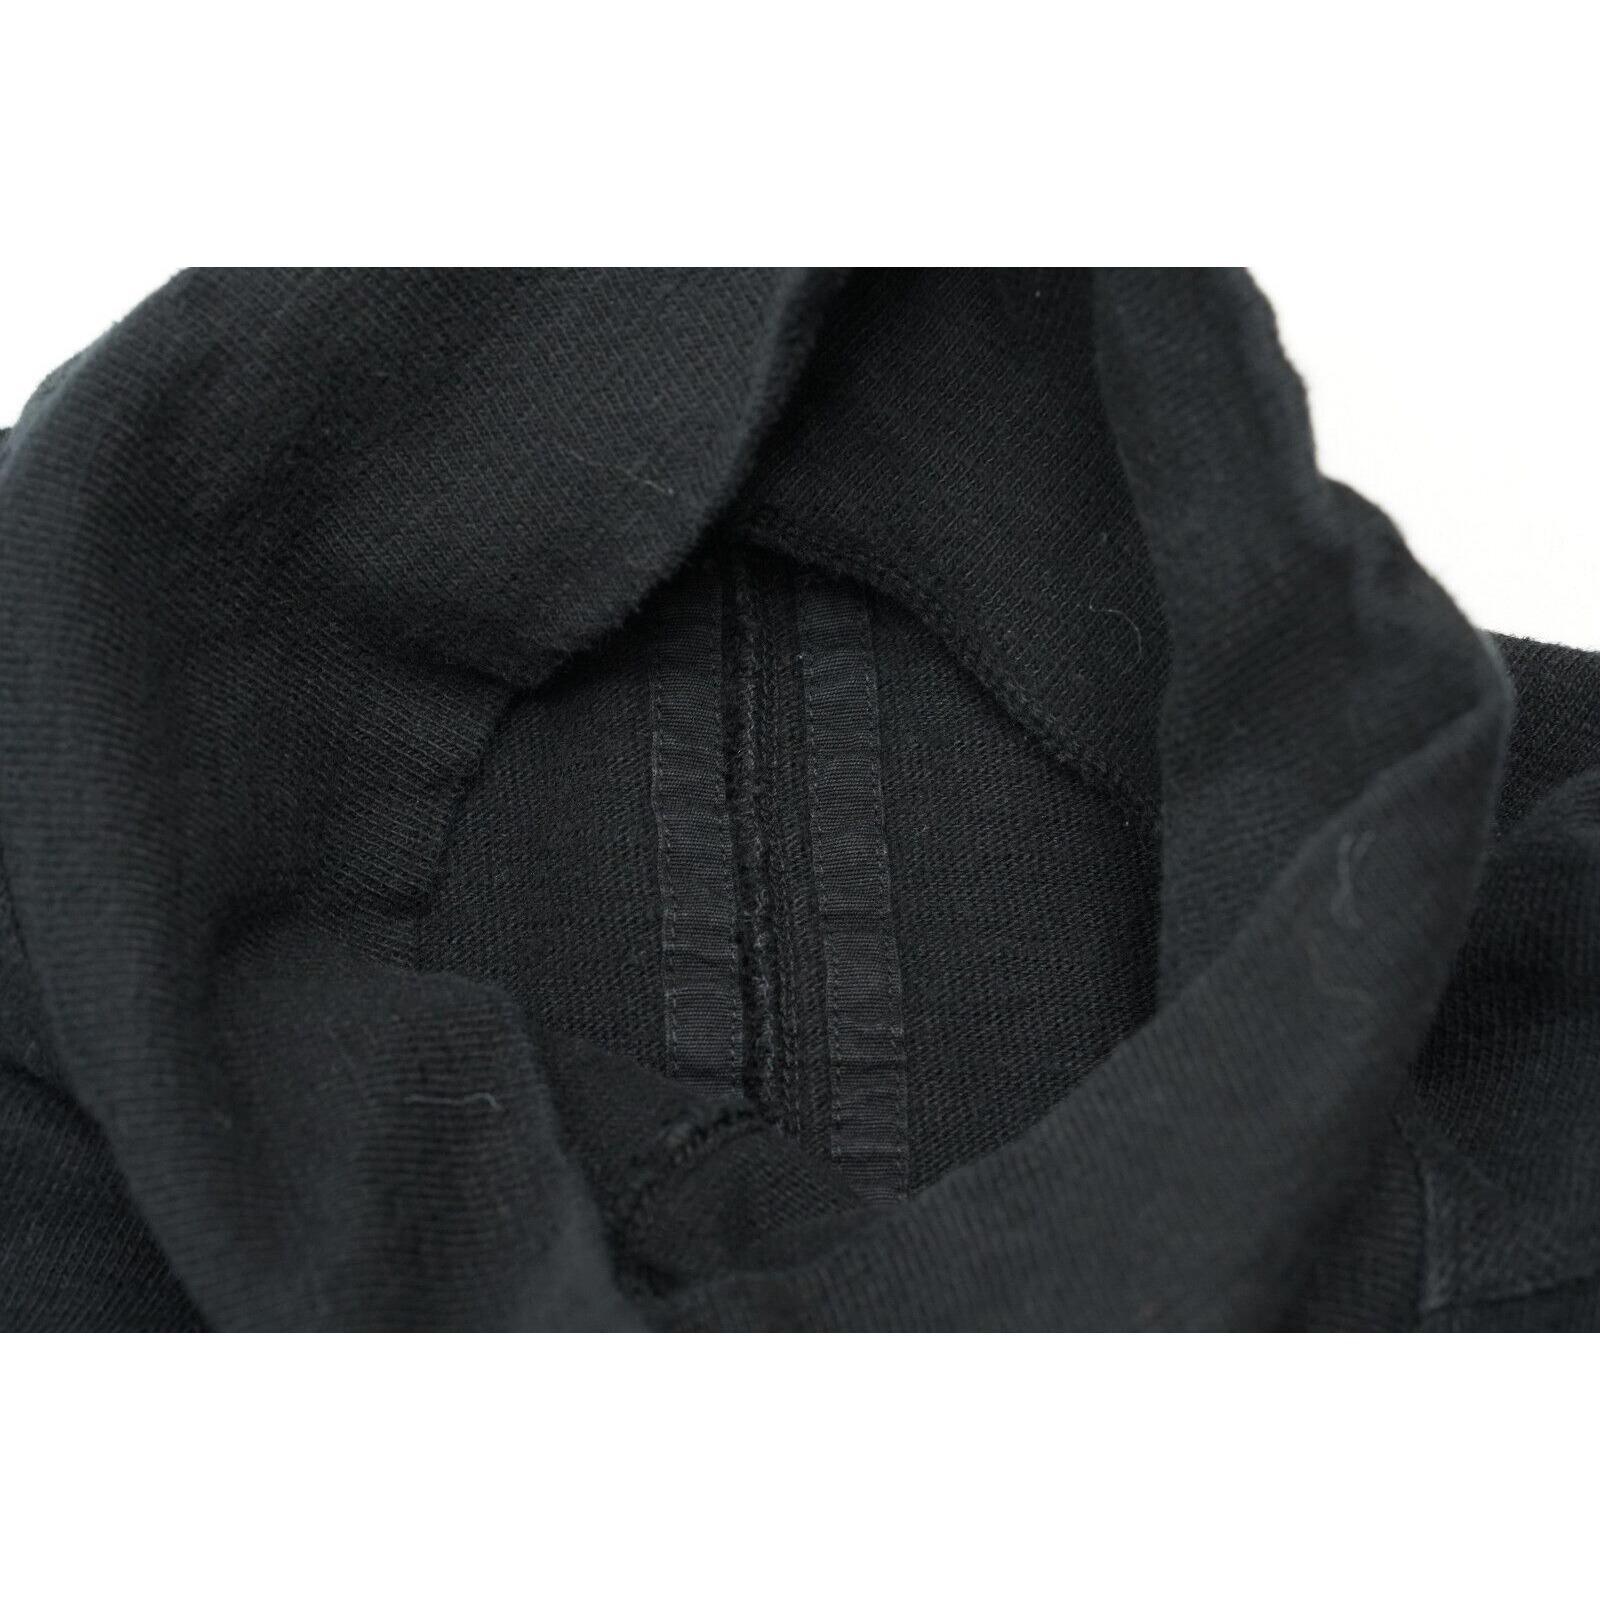 Rick Black Turtleneck Sweater Size Medium FW17 Glitter - 3